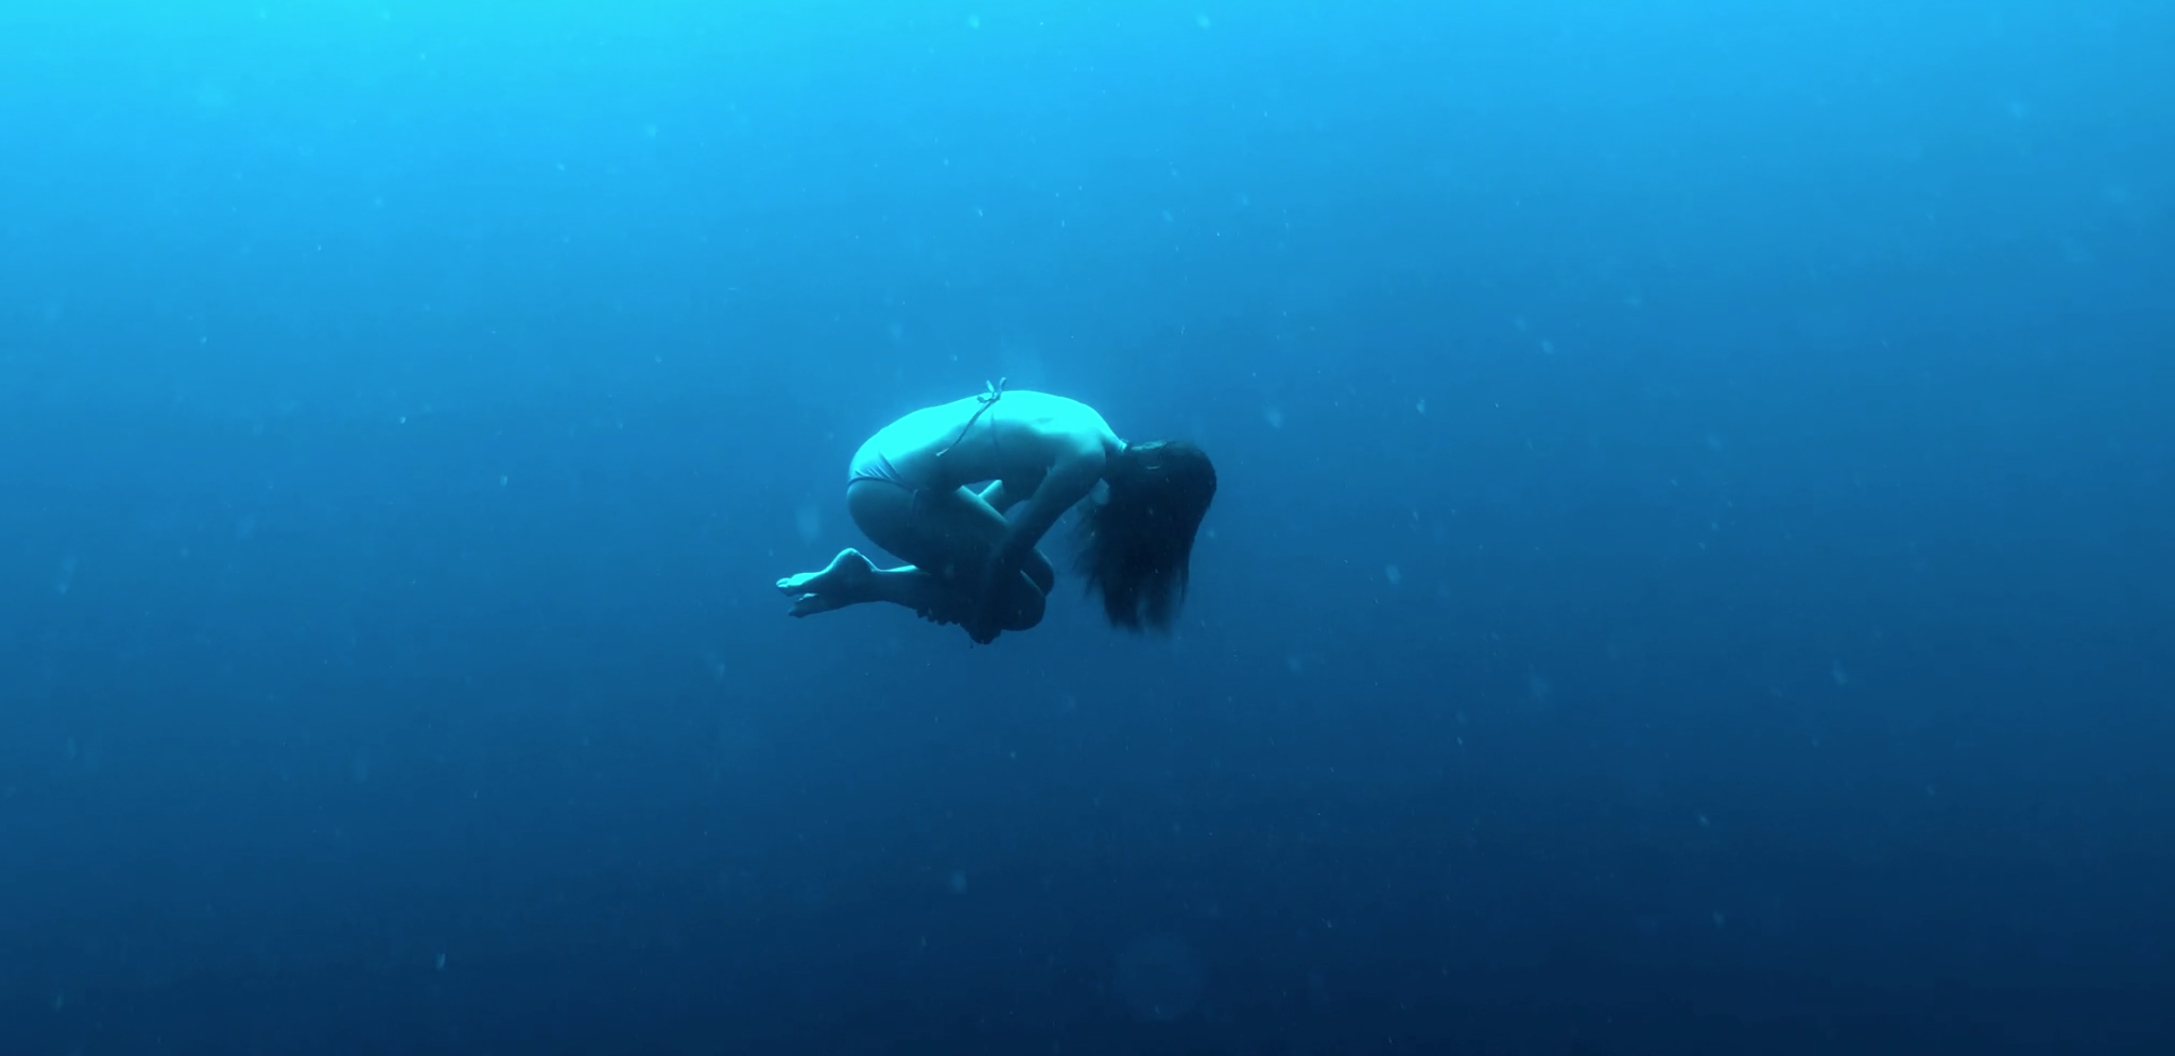 Underwater Film Dramatizes the Value of Silence